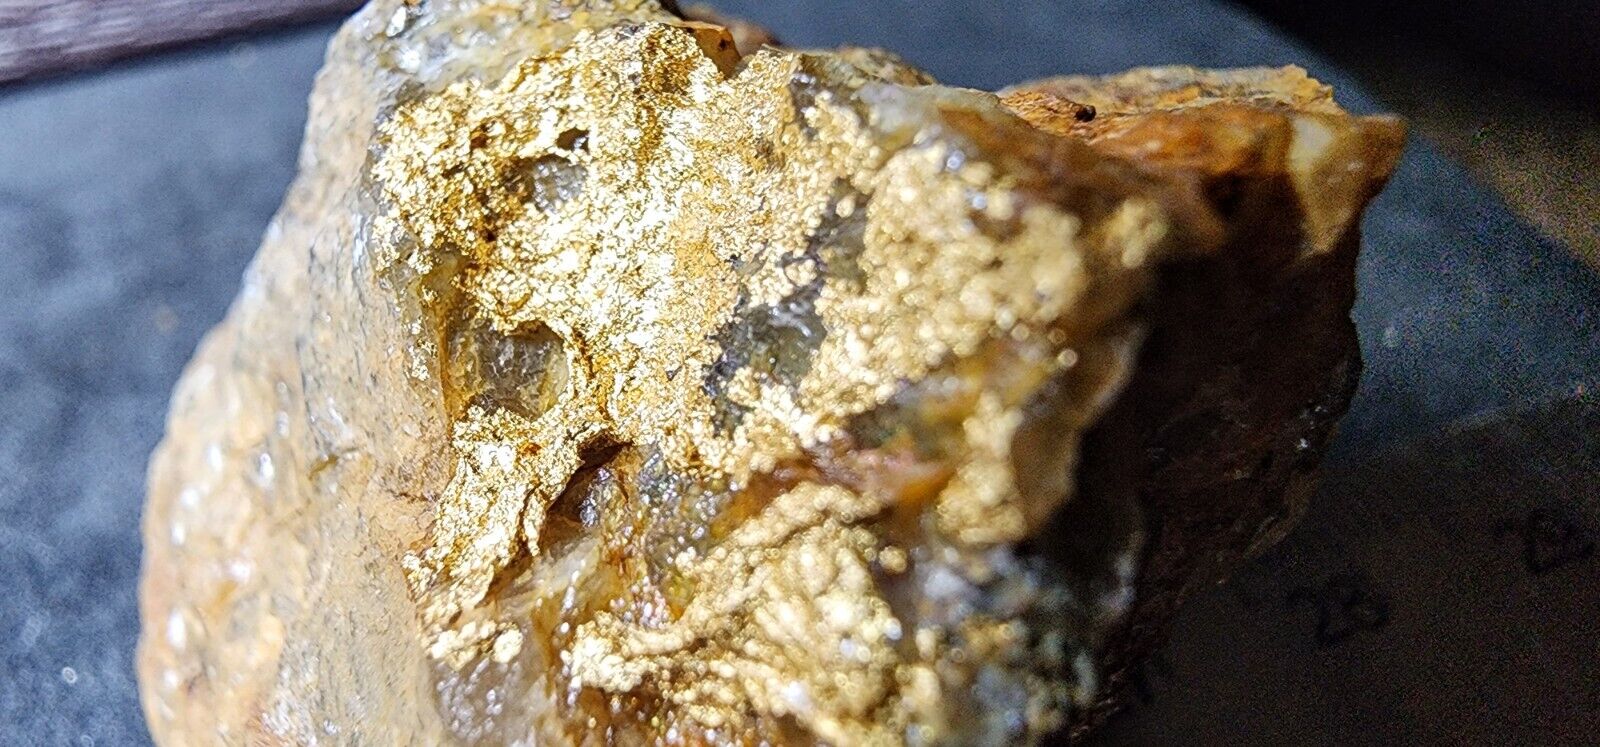 Gold Ore Specimen 54g Crystalline Gold From Ontario - 2509